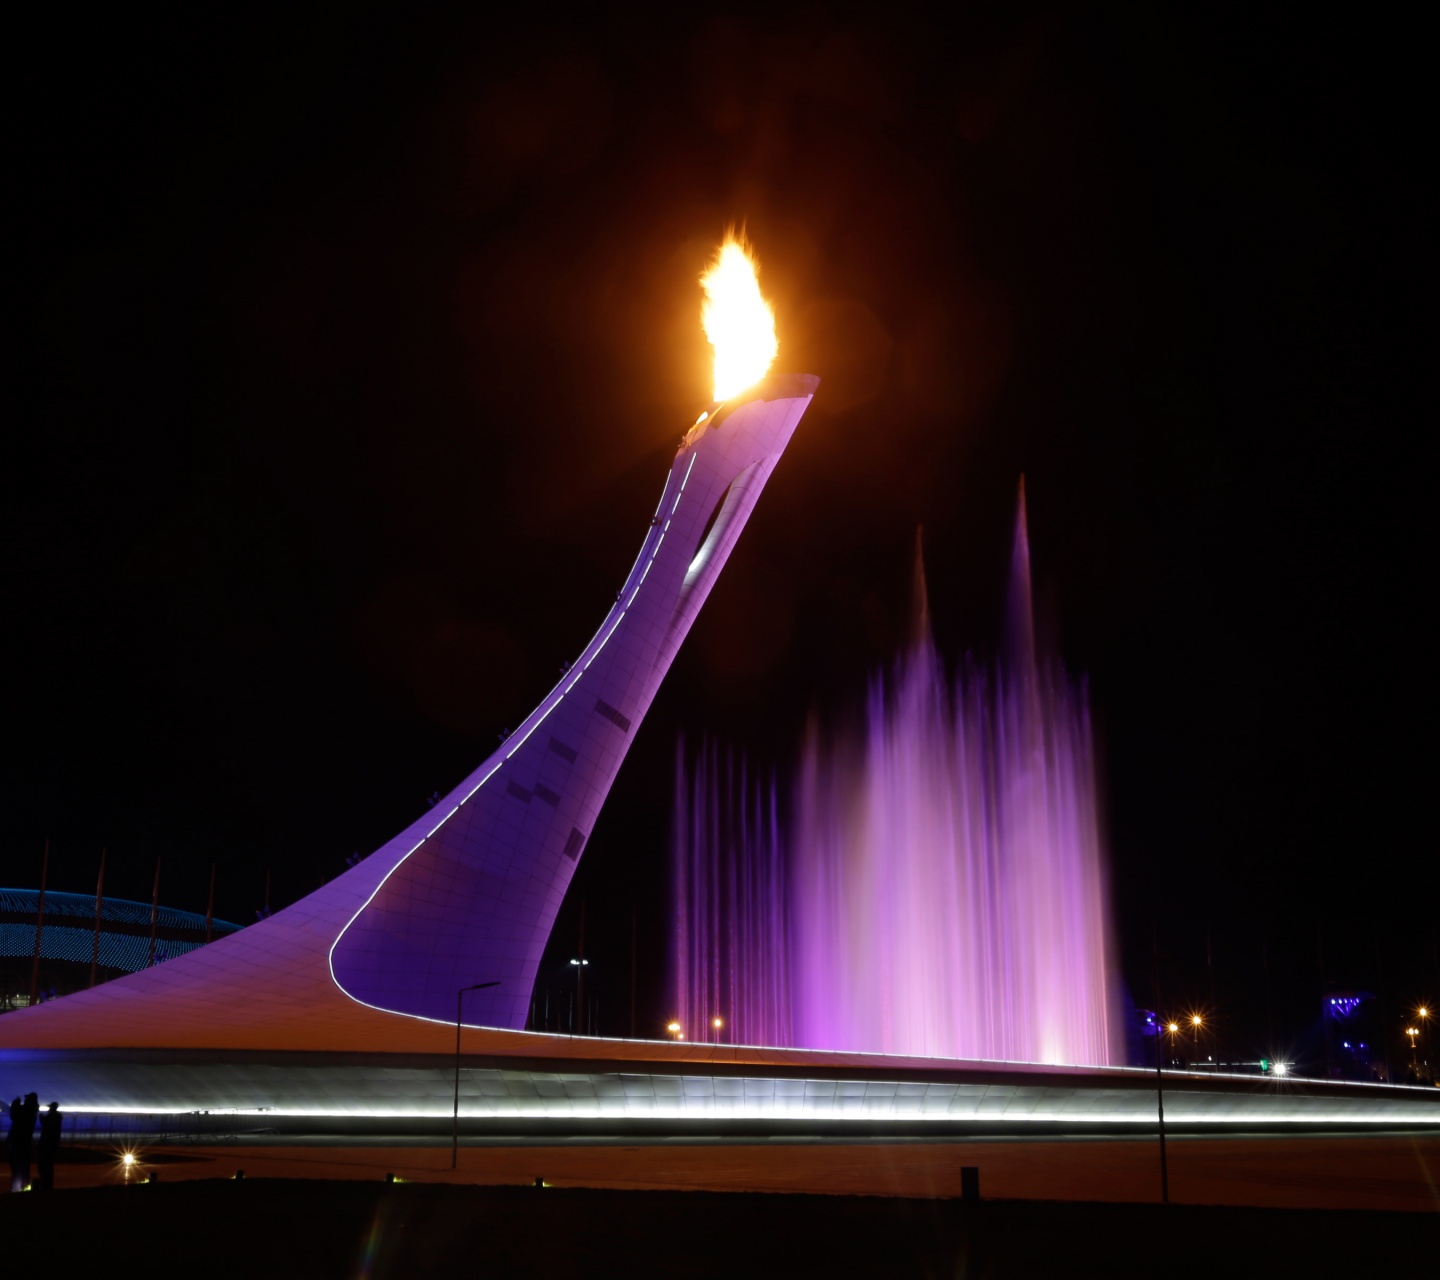 Let The Games Begin - Sochi 2014